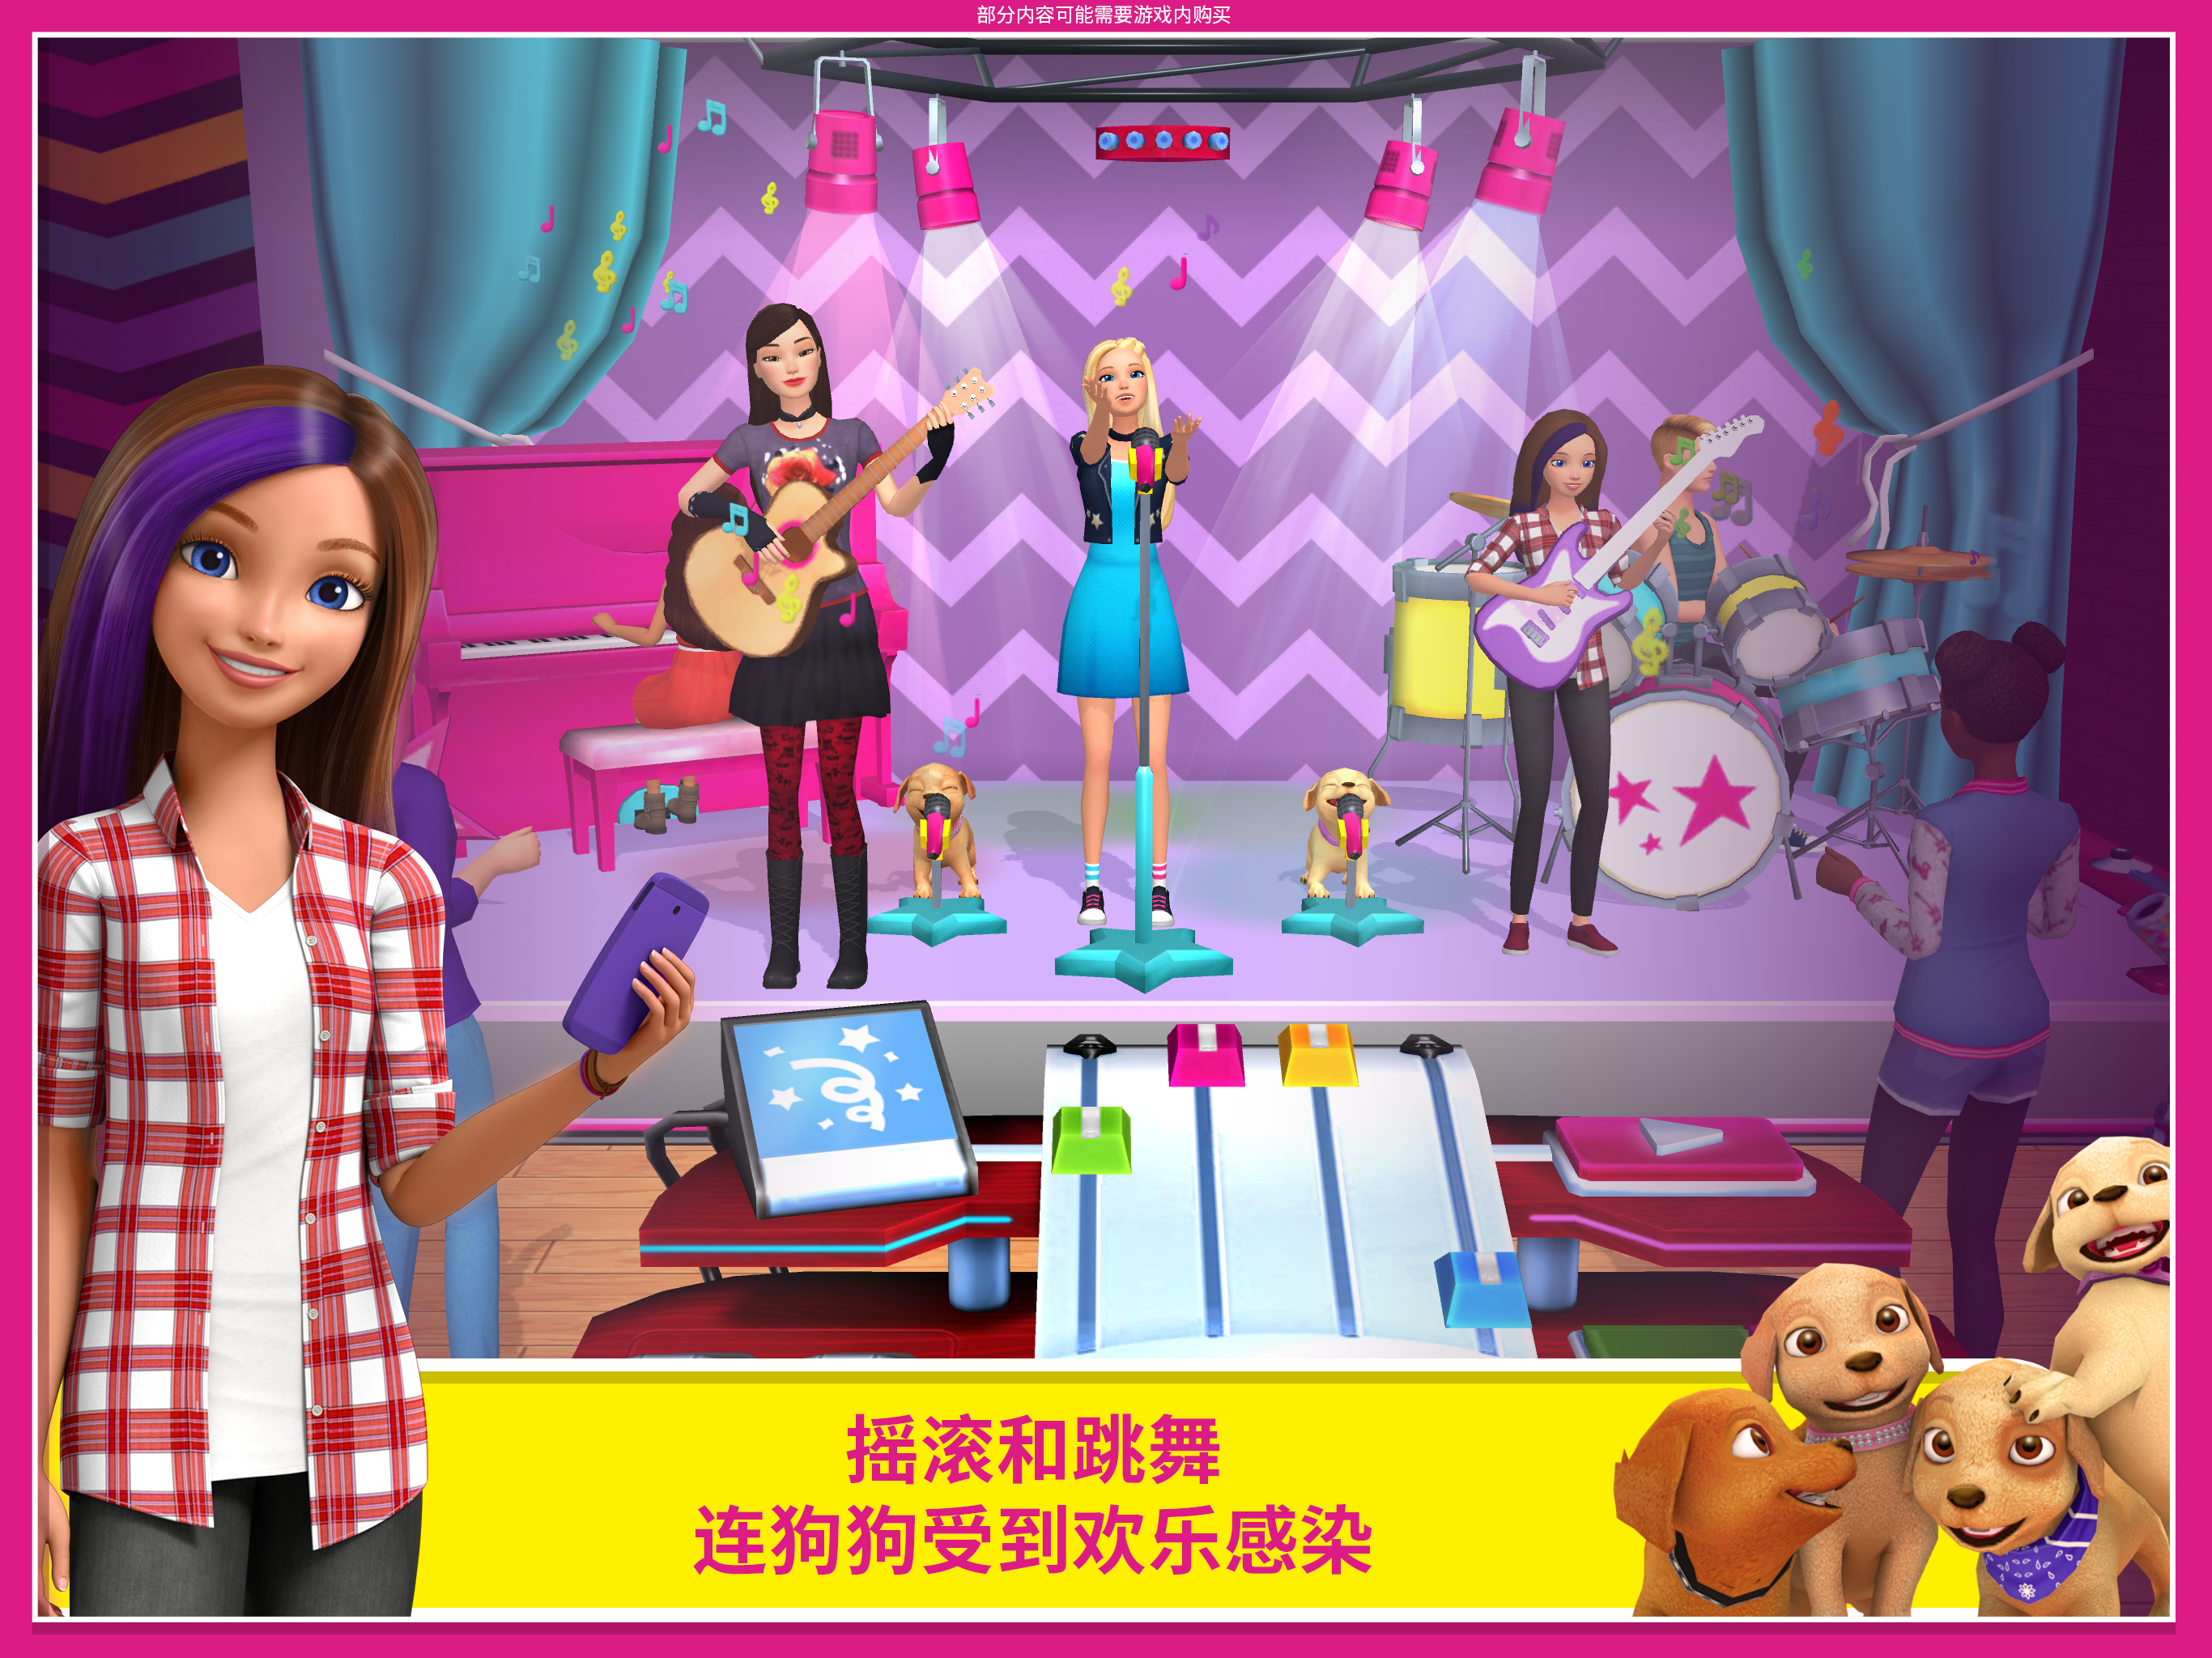 barbie dream house game online